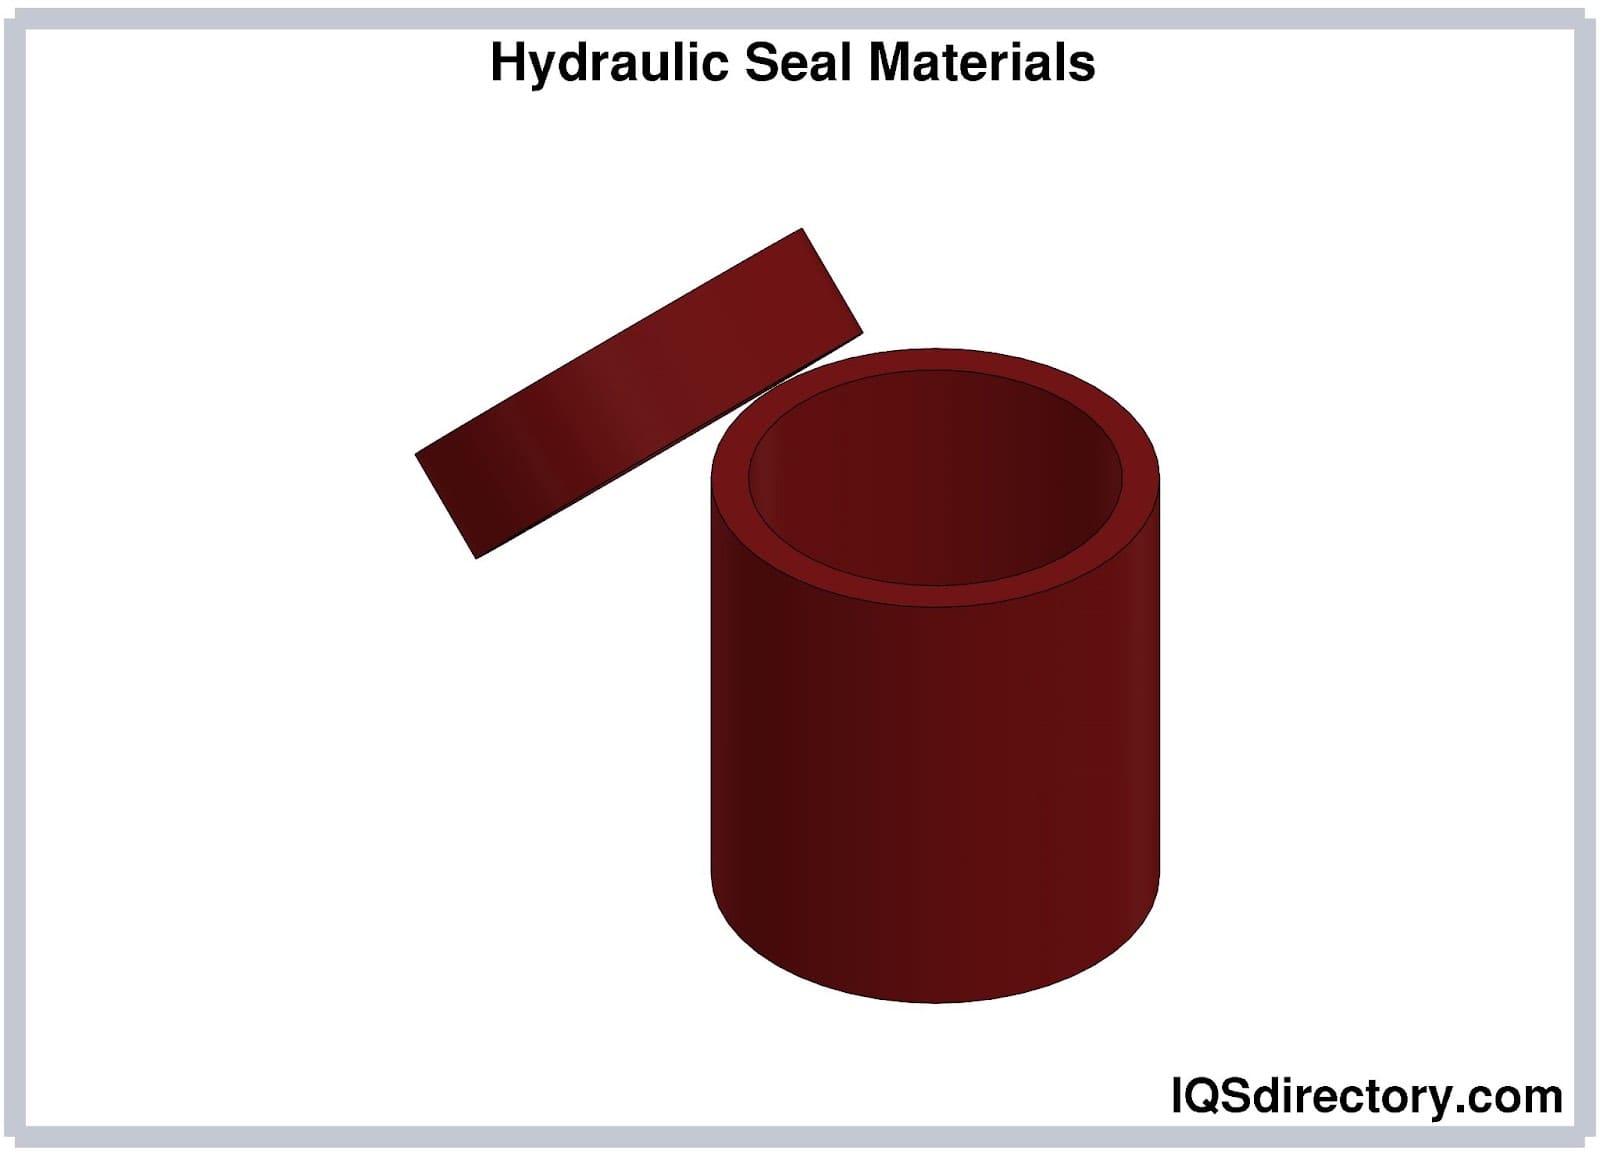 Hydraulic Seal Materials